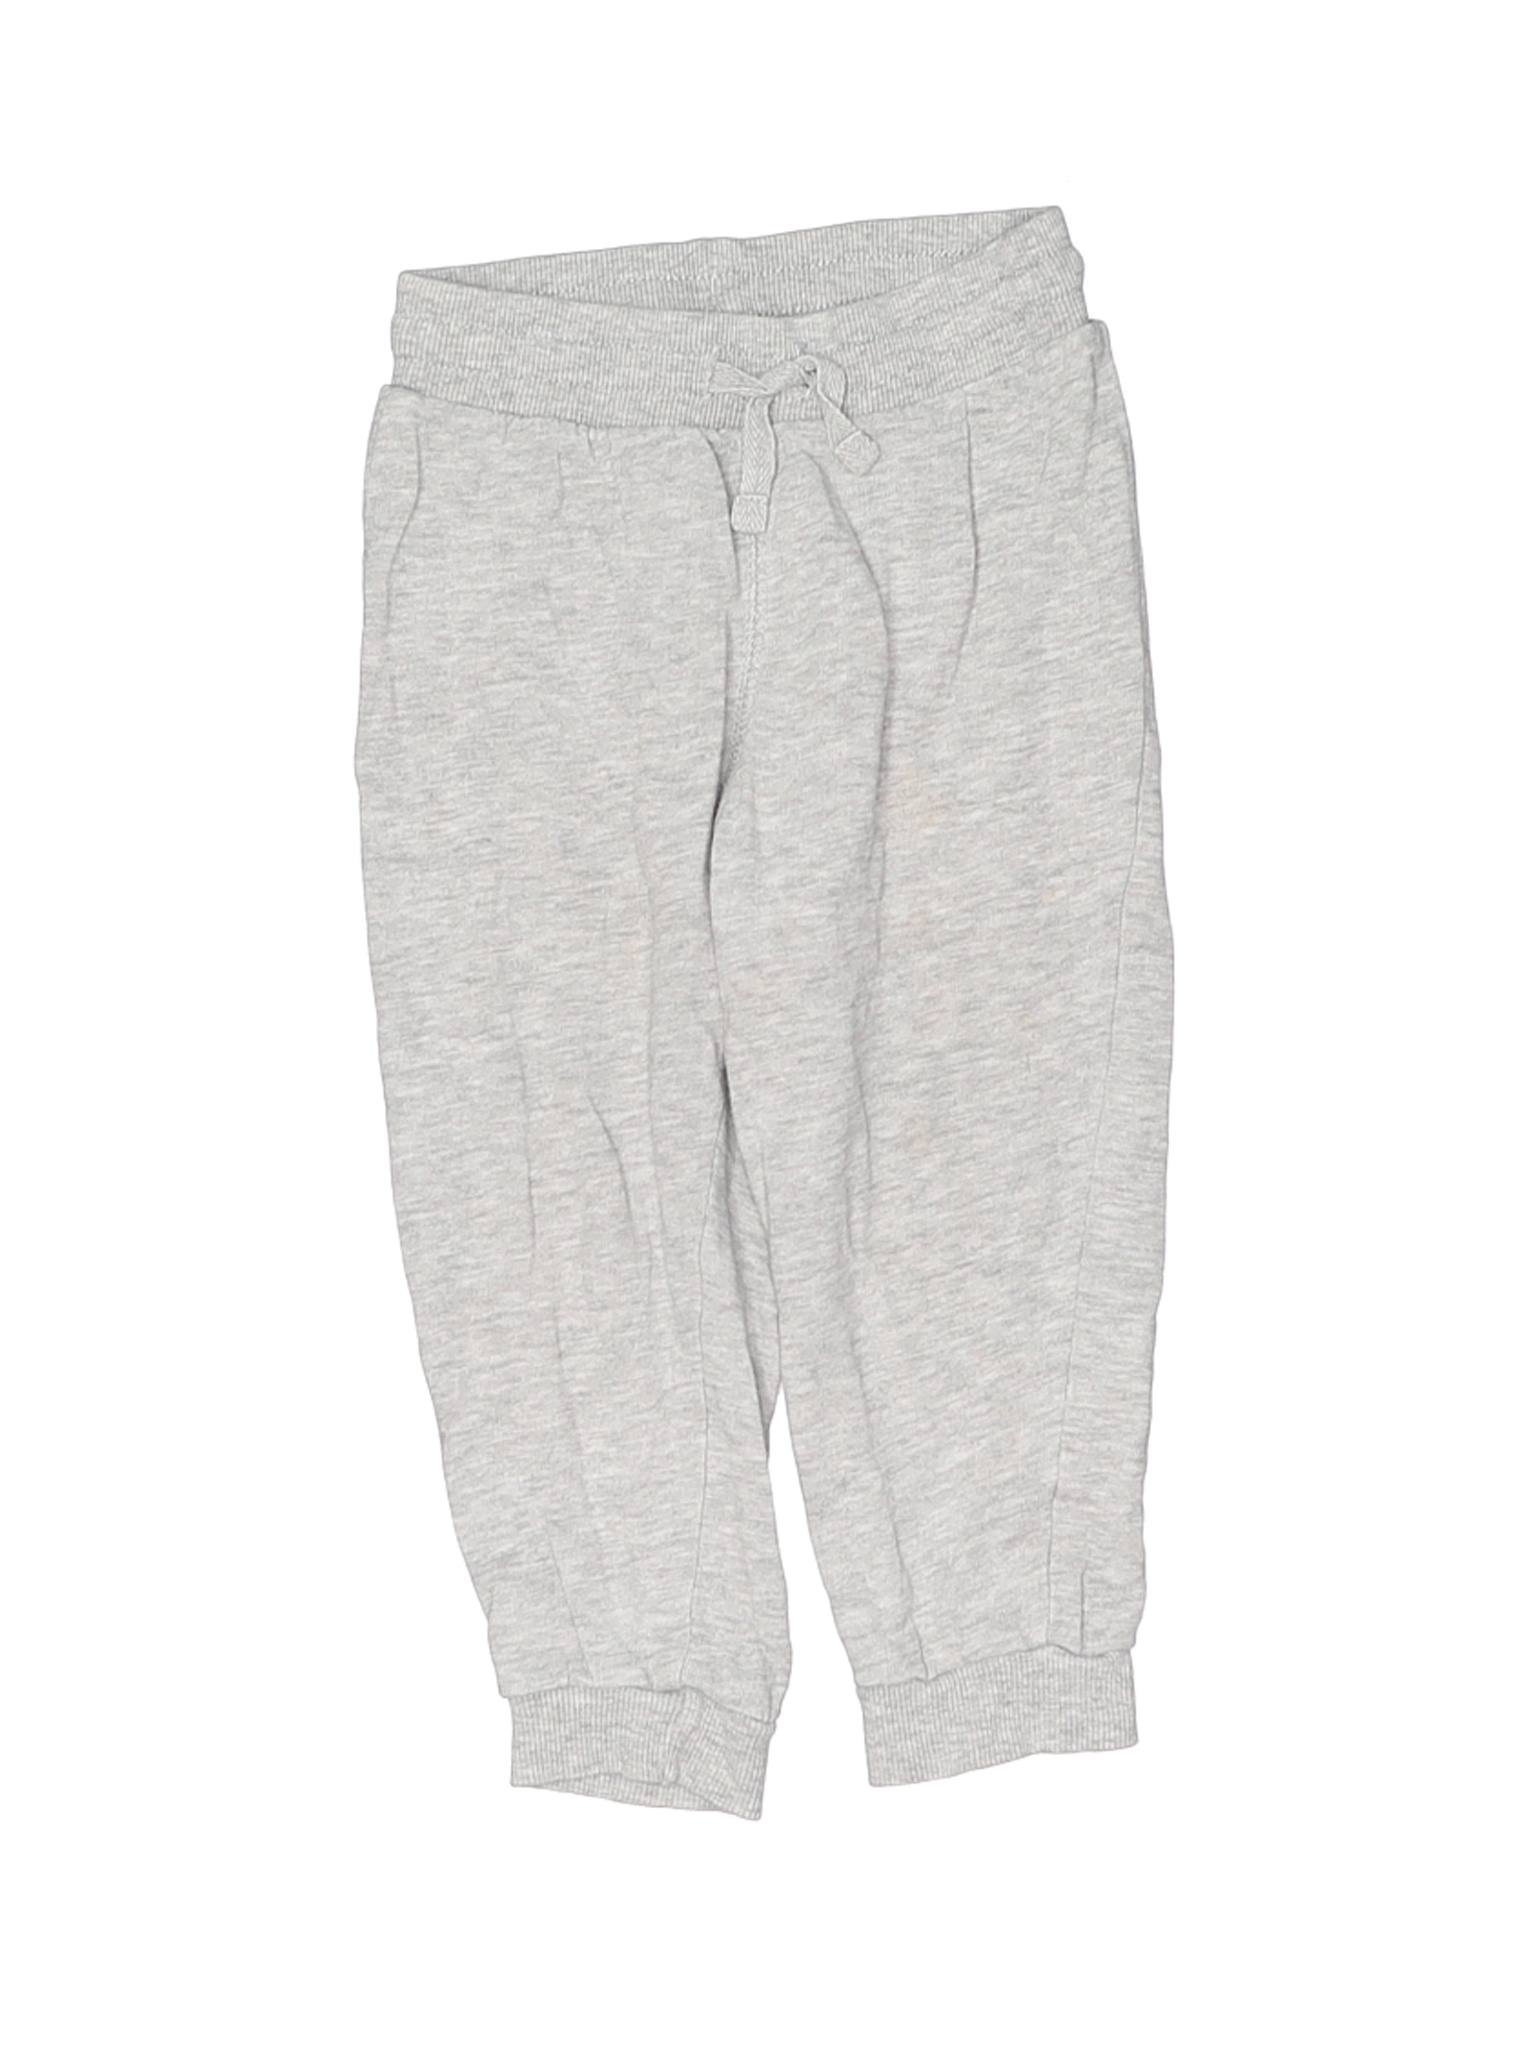 H&M Boys Gray Sweatpants Preemie/Up to 7 lb. | eBay